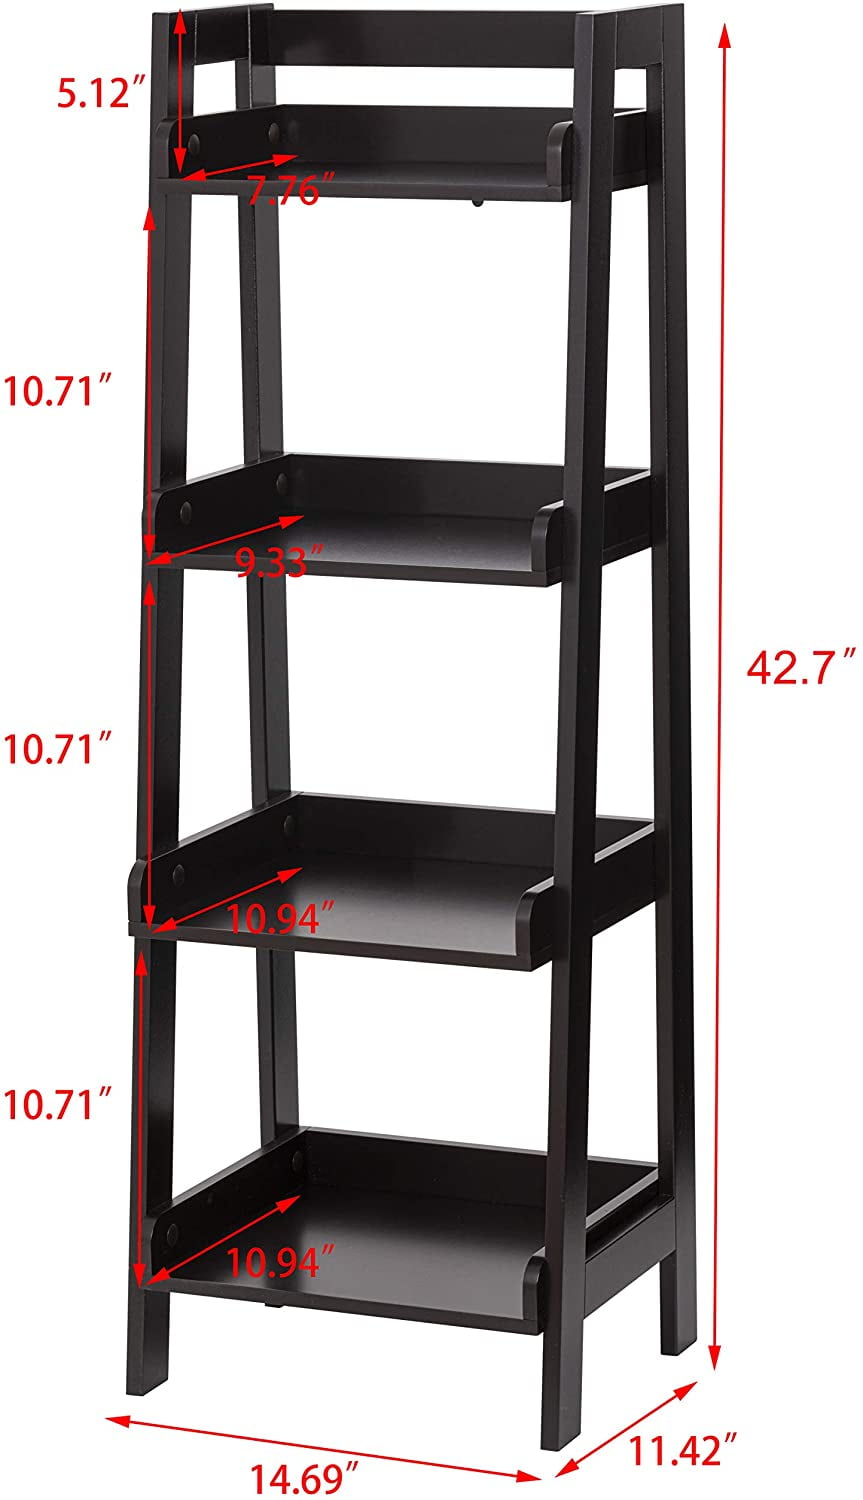 UTEX 3 Tier Ladder Shelf In White & Espresso– spirichhome